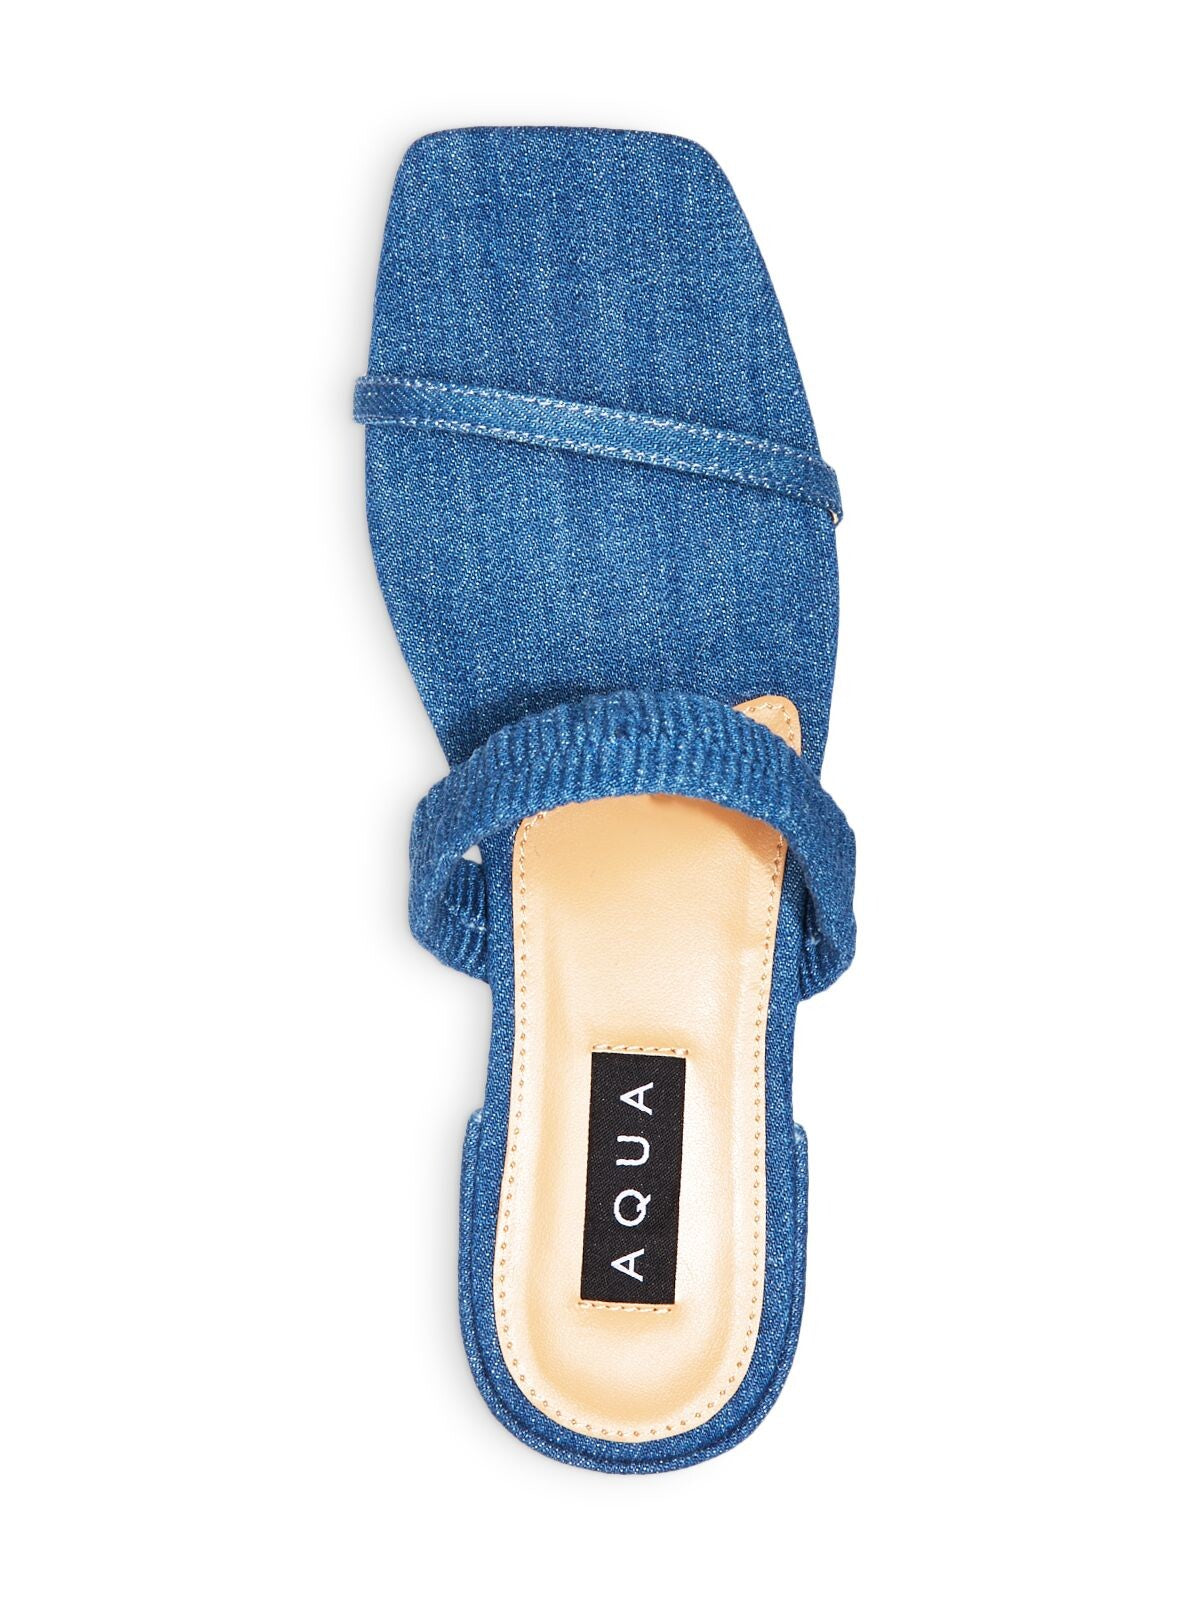 AQUA Womens Blue Cushioned Stretch Livi Square Toe Block Heel Slip On Slide Sandals Shoes 6.5 M